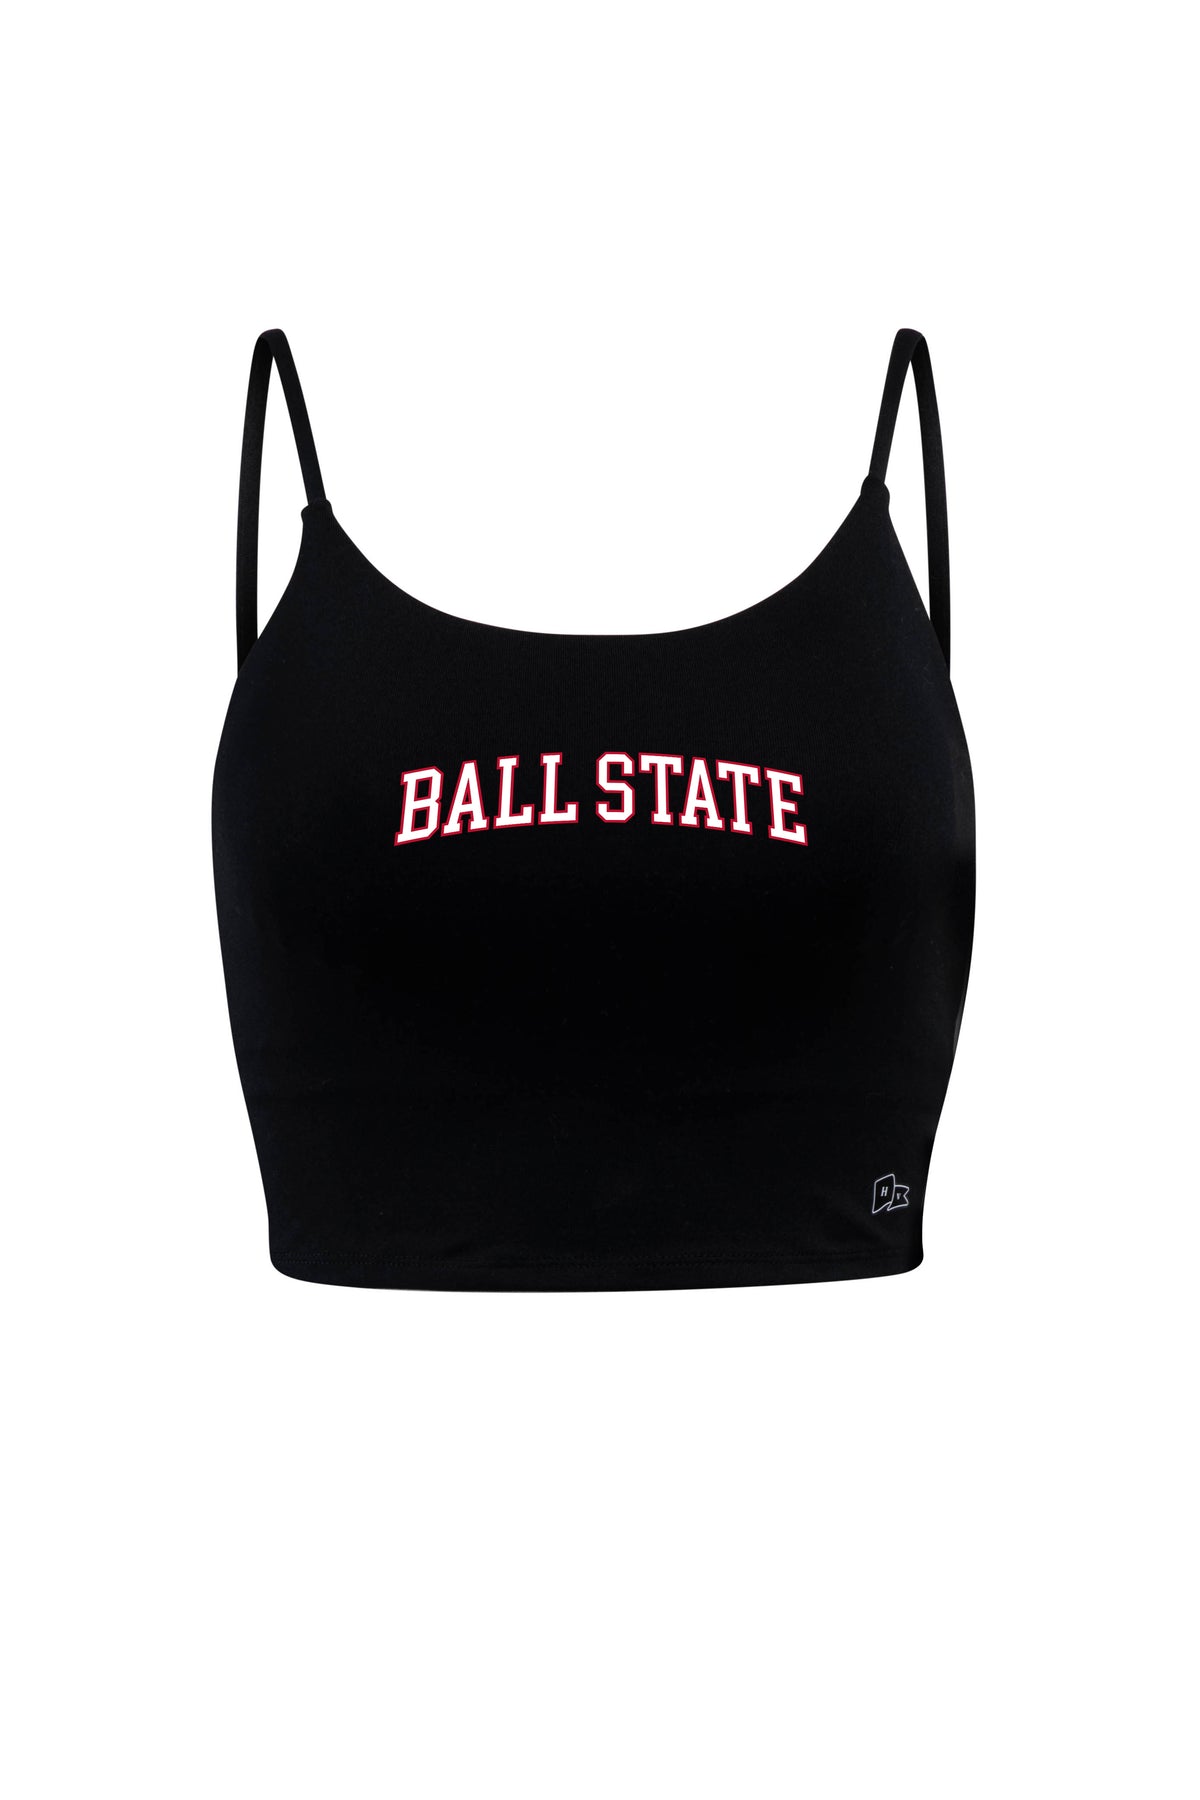 Ball State University Bra Tank Top